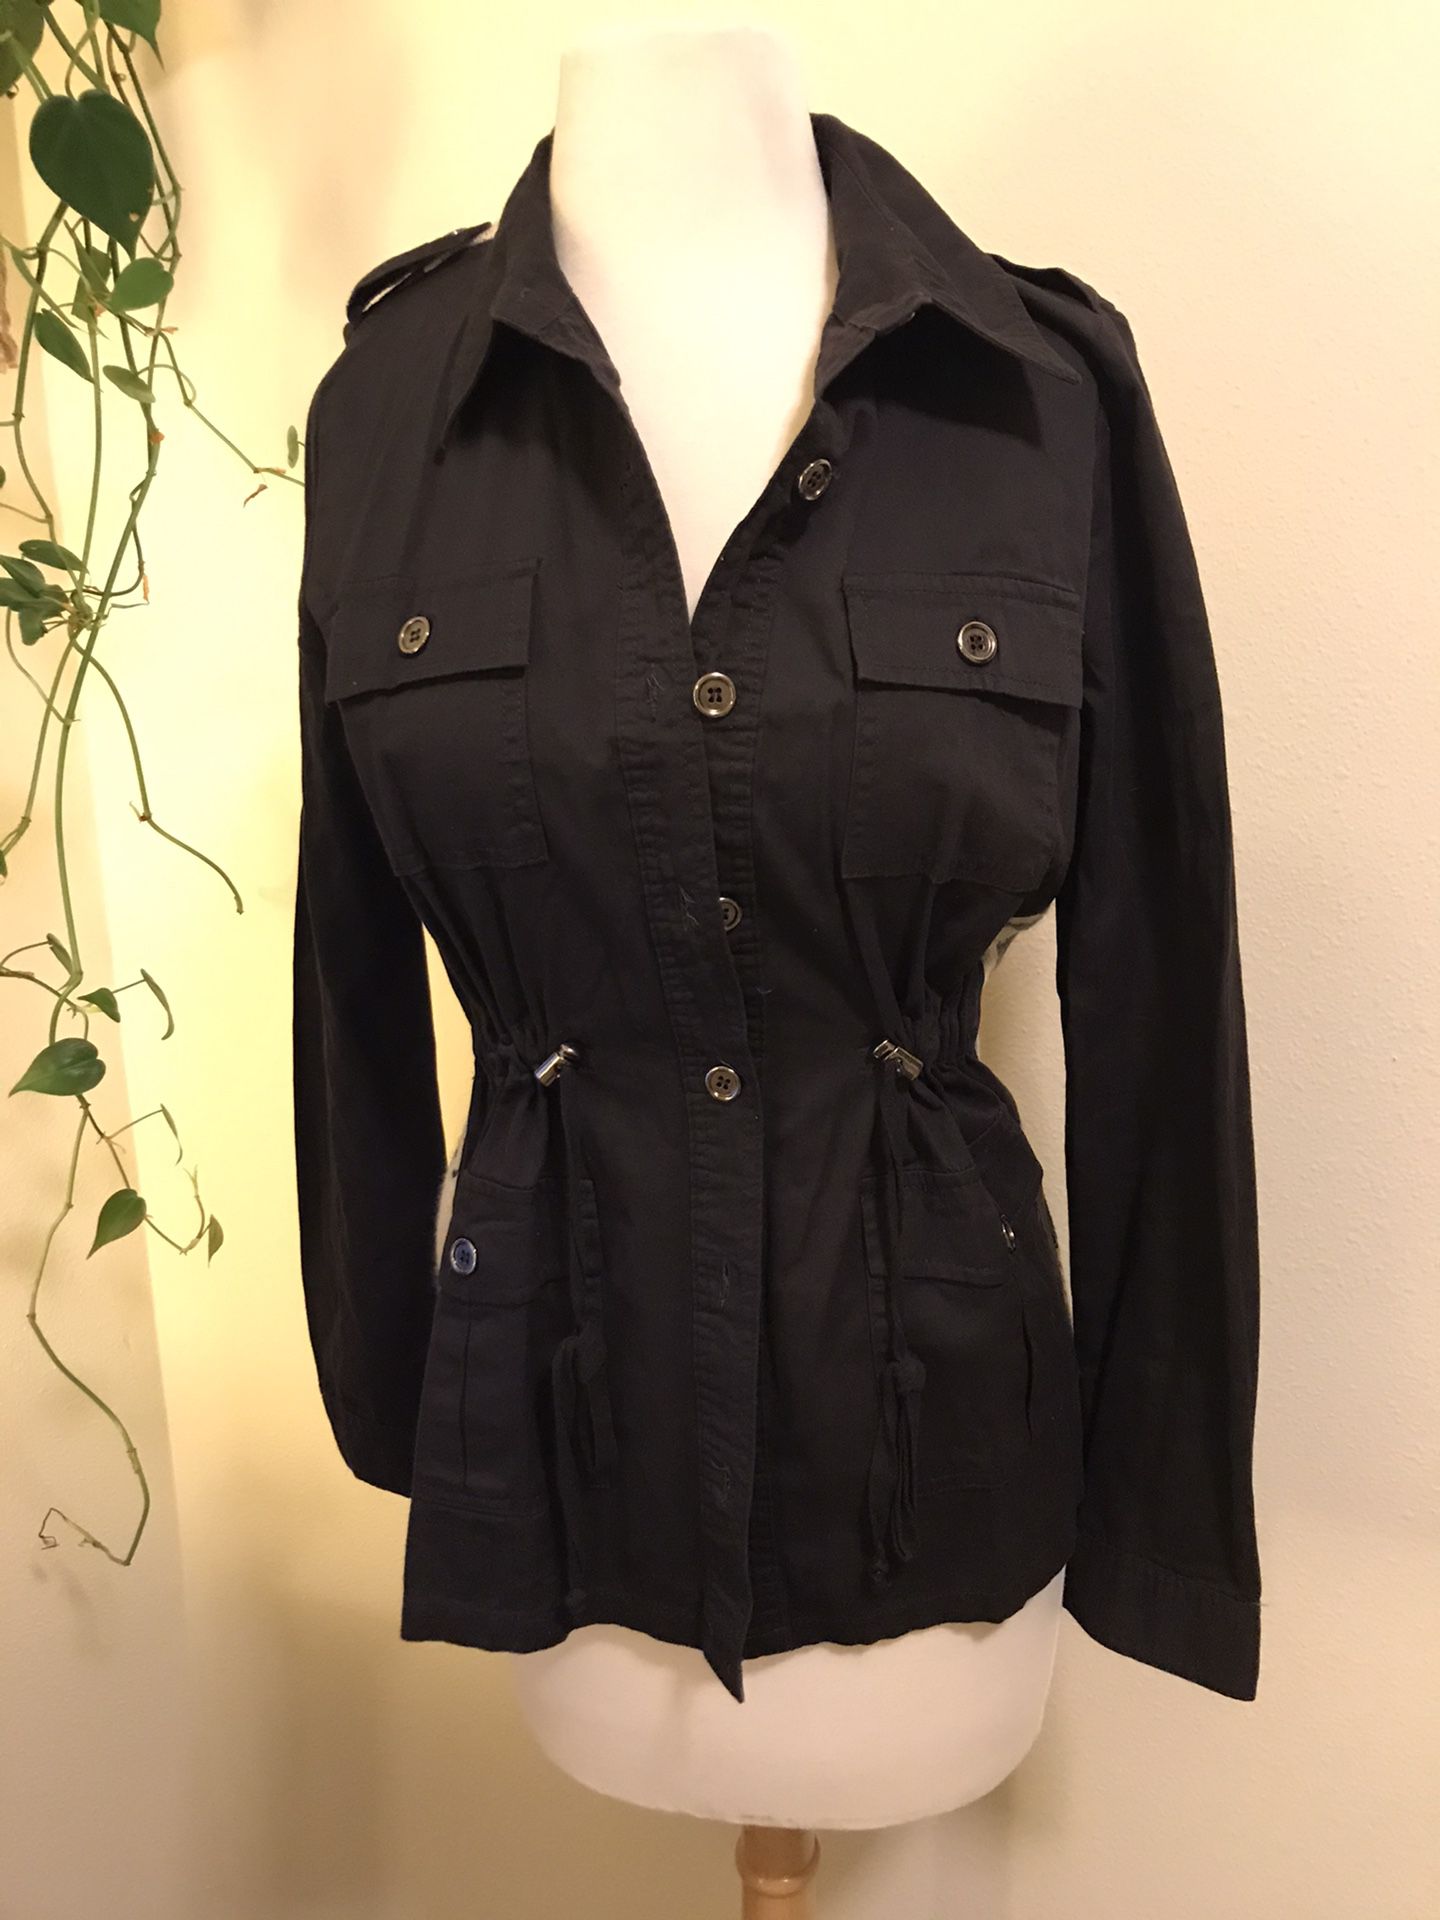 Black jacket w/ design